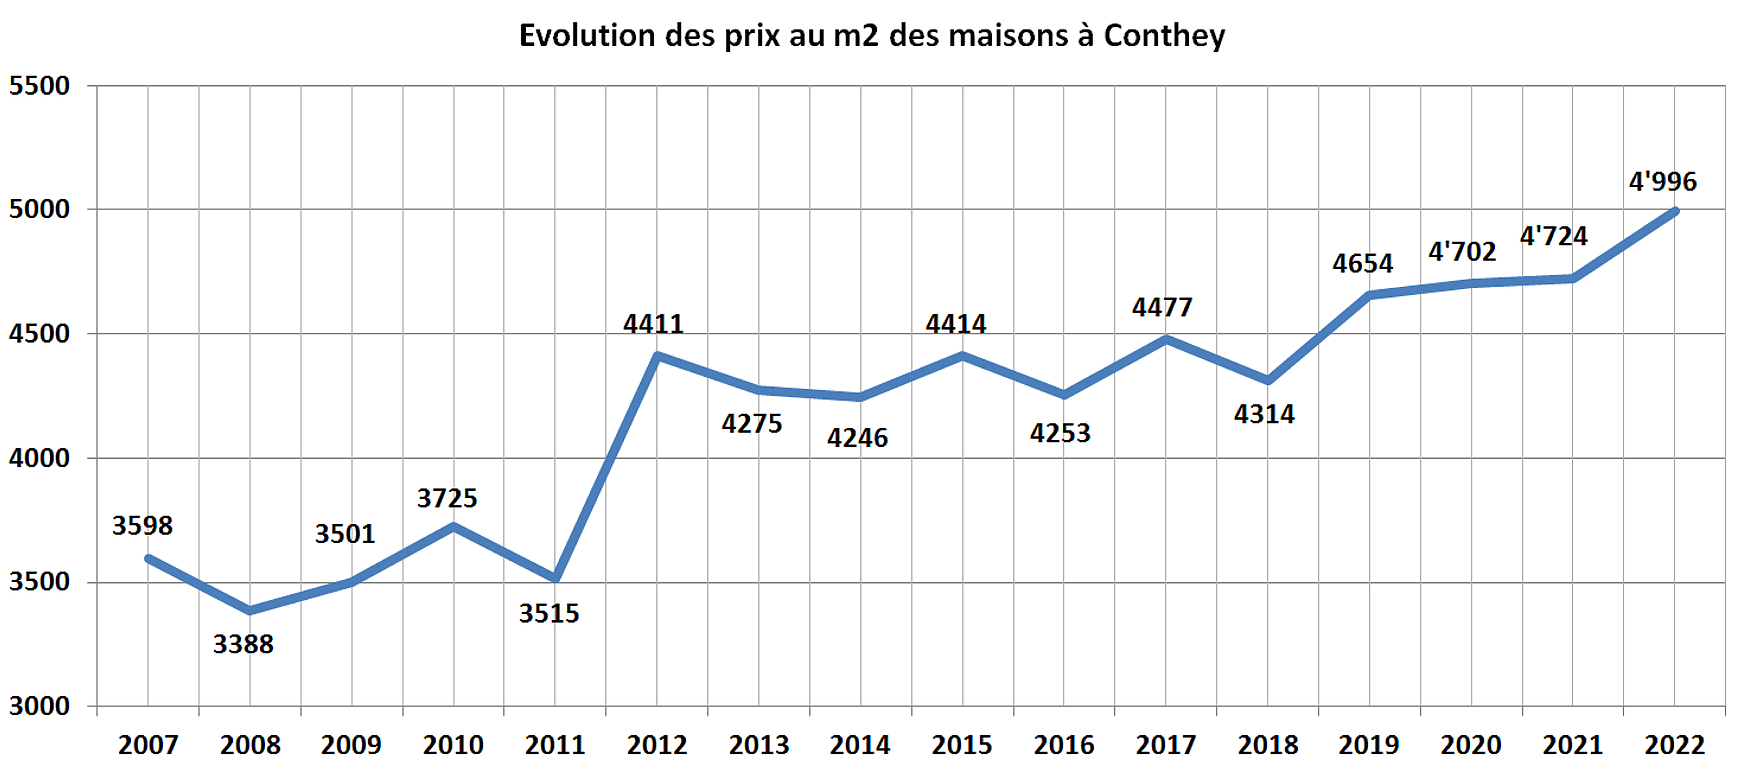 evolution prix m2 maison conthey 2022